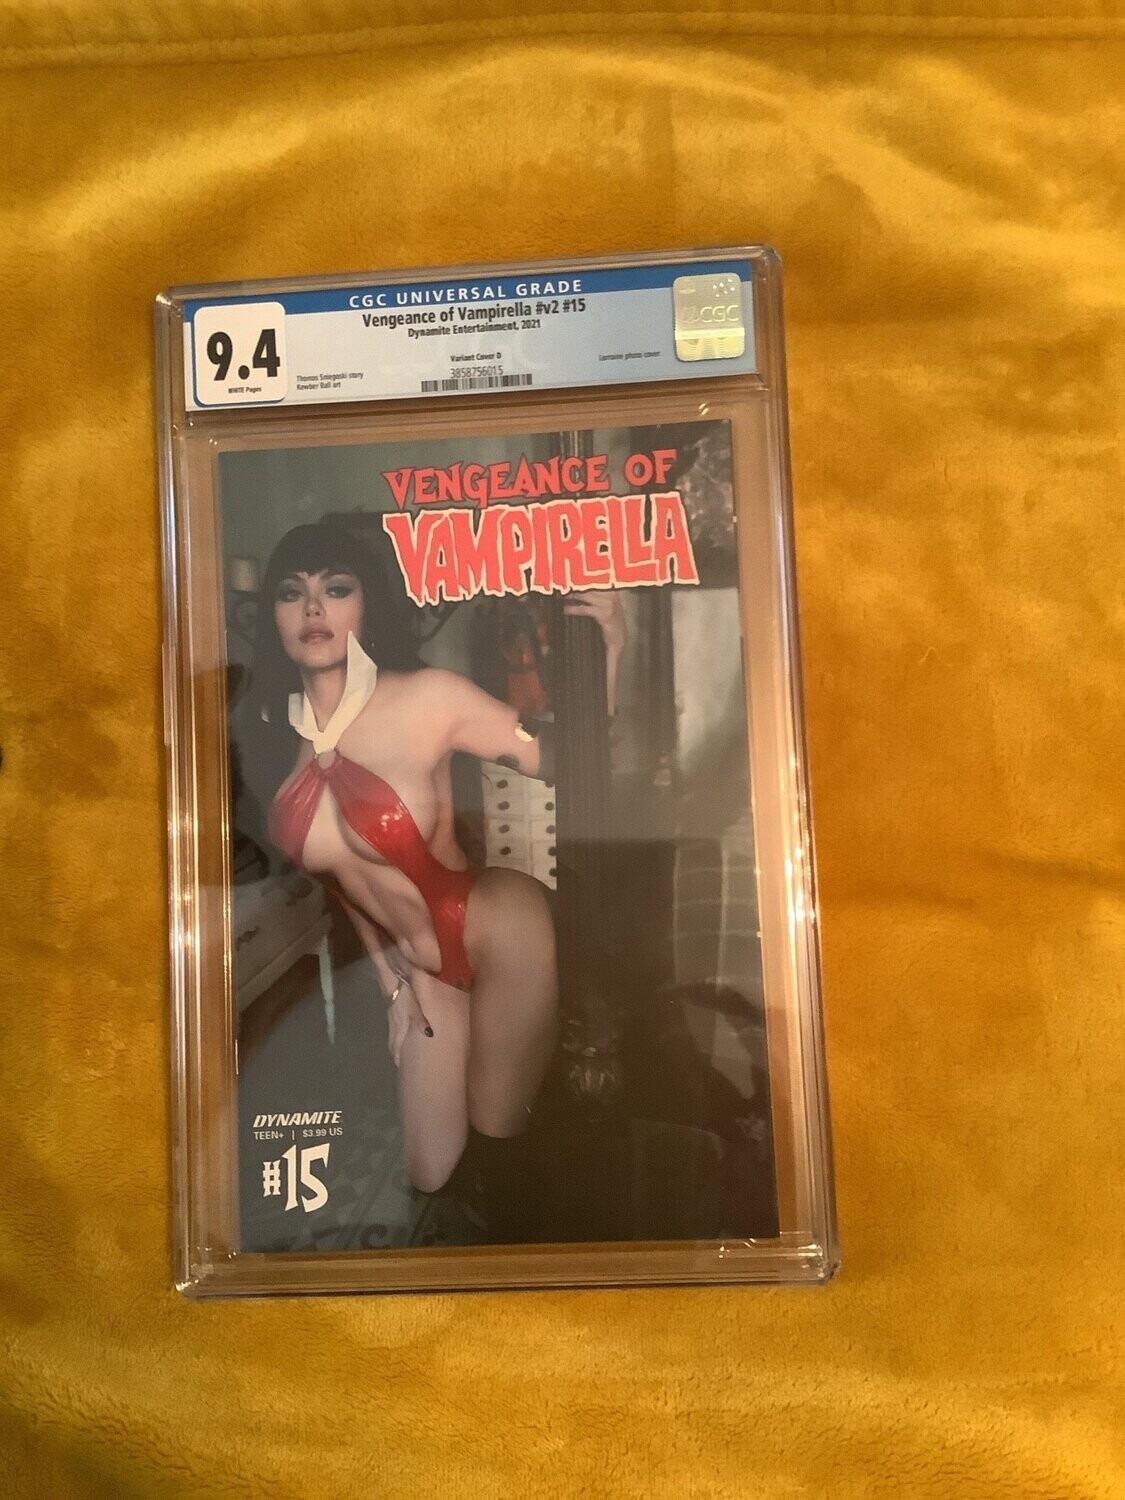 Vengeance of Vampirella v2 # 15 cosplay cover CGC 9.4